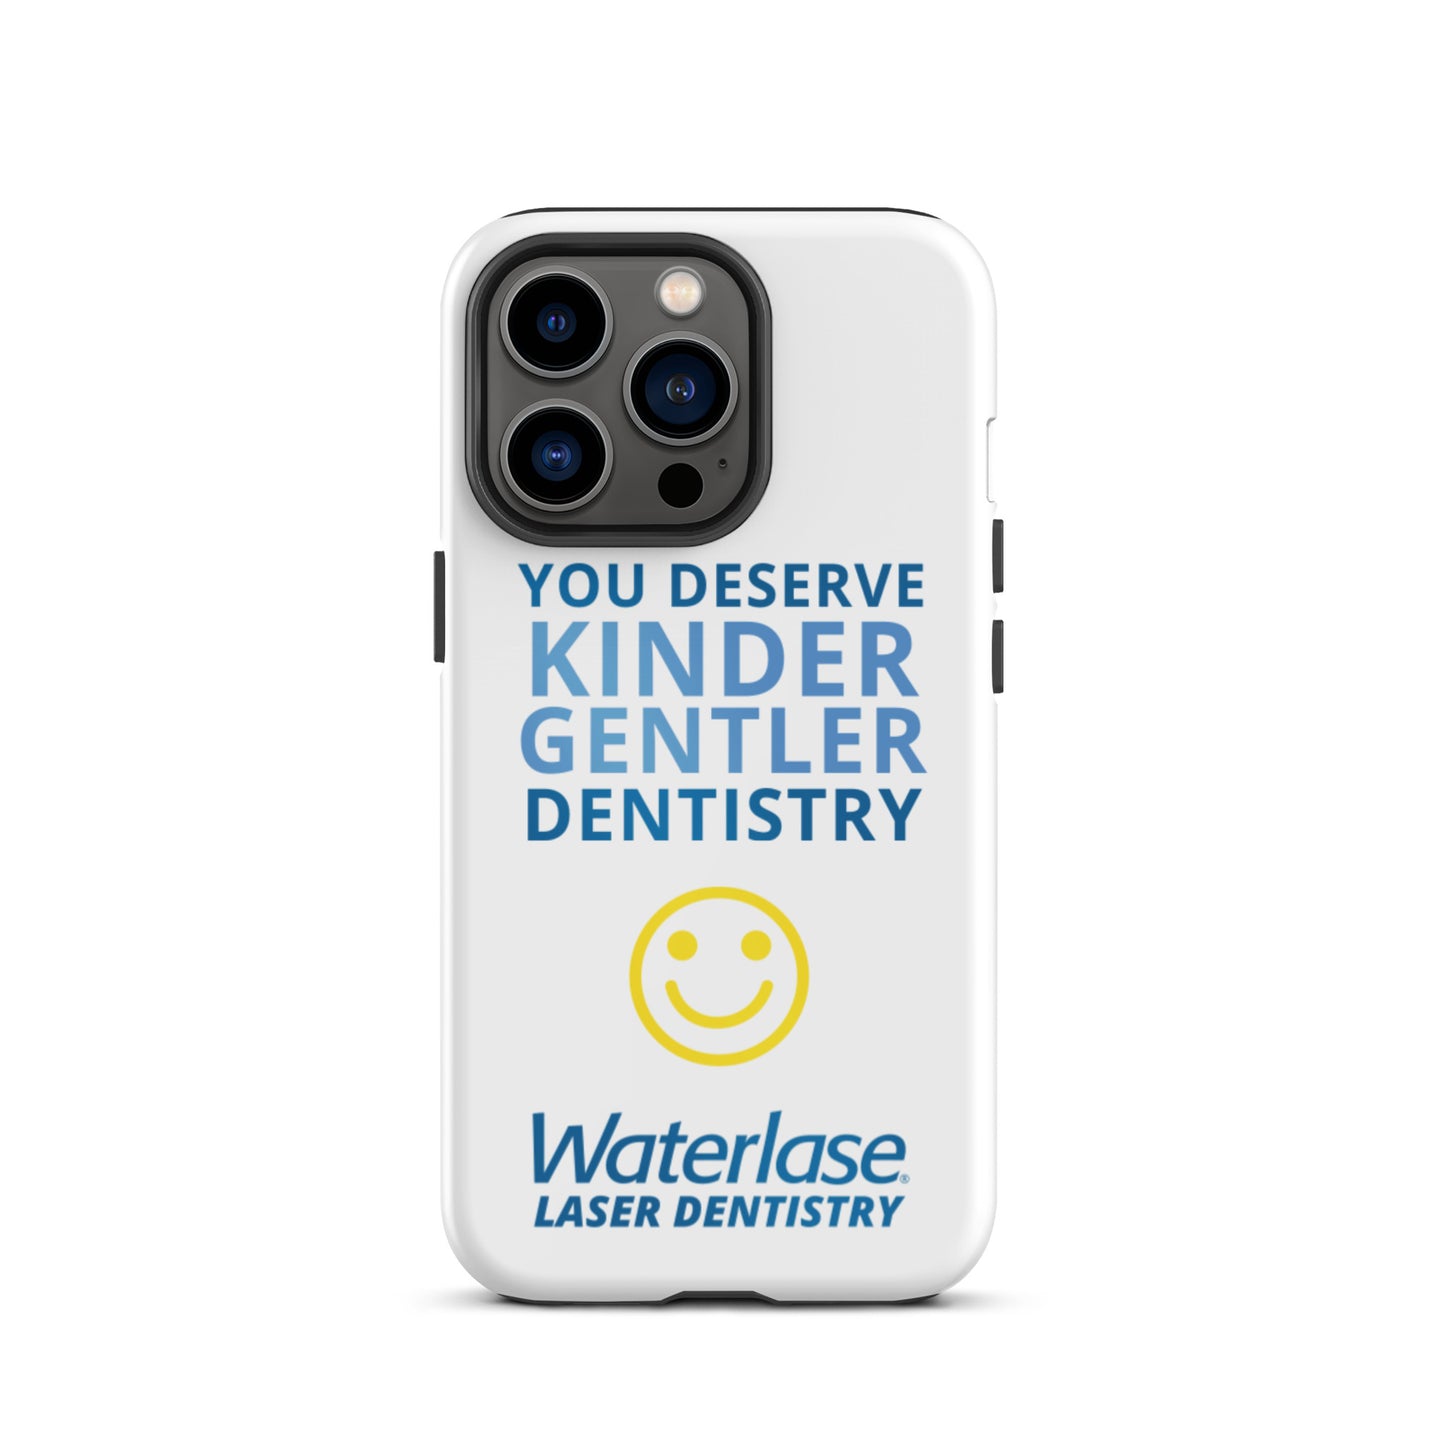 Kinder, Gentler Dentistry but a Tough iPhone Case